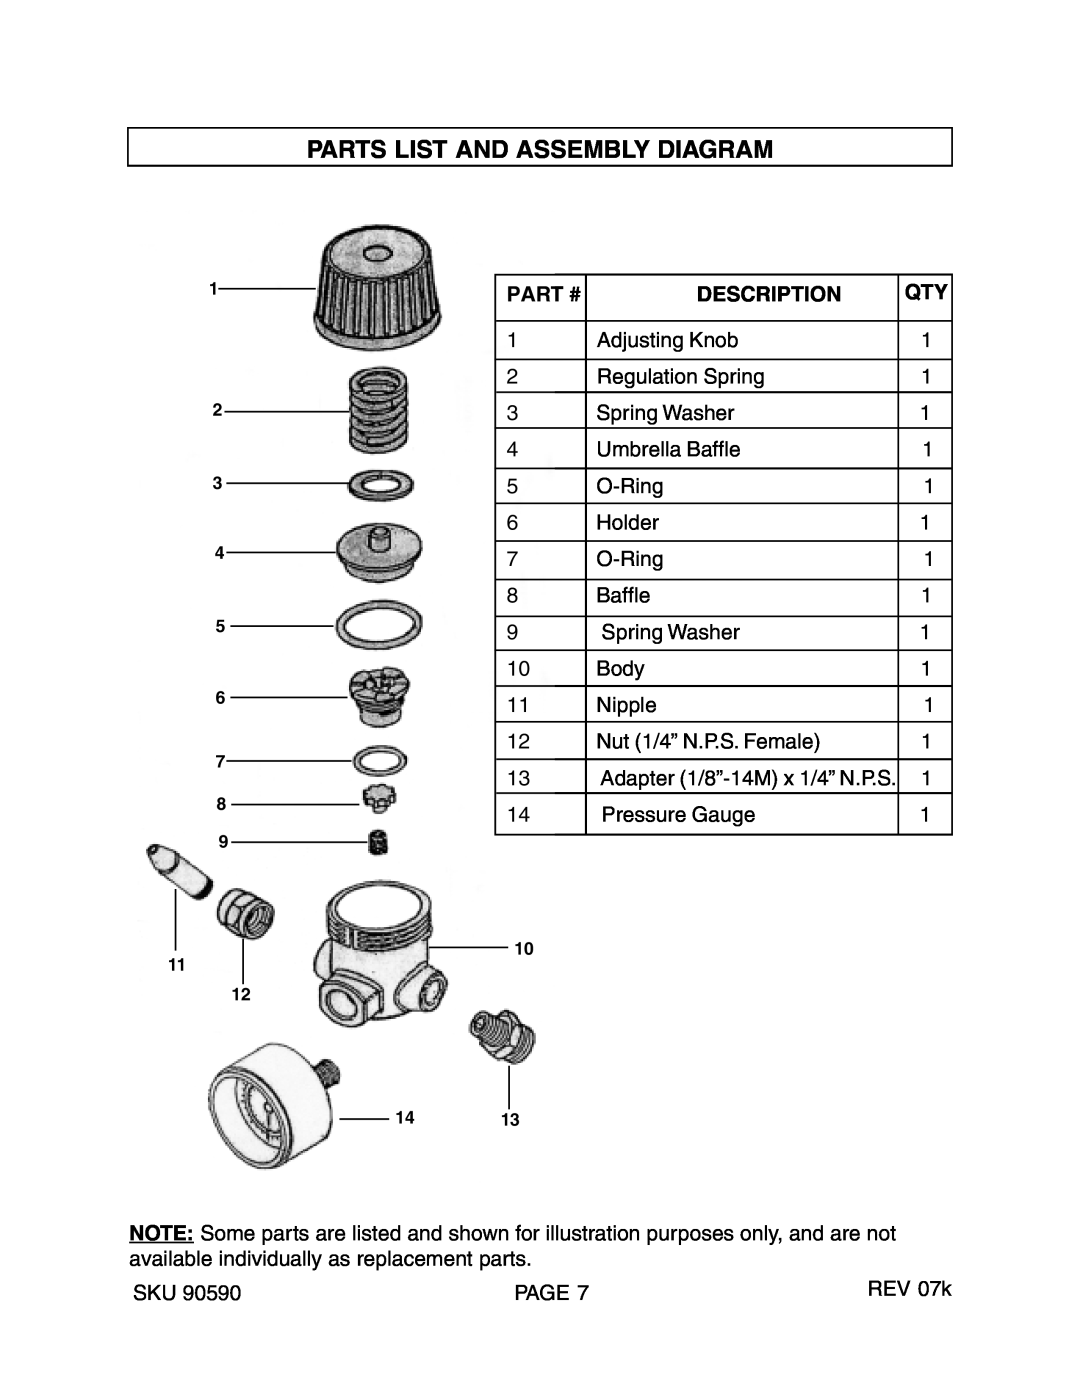 Harbor Freight Tools 90590 manual Parts List And Assembly Diagram, Part #, Description 